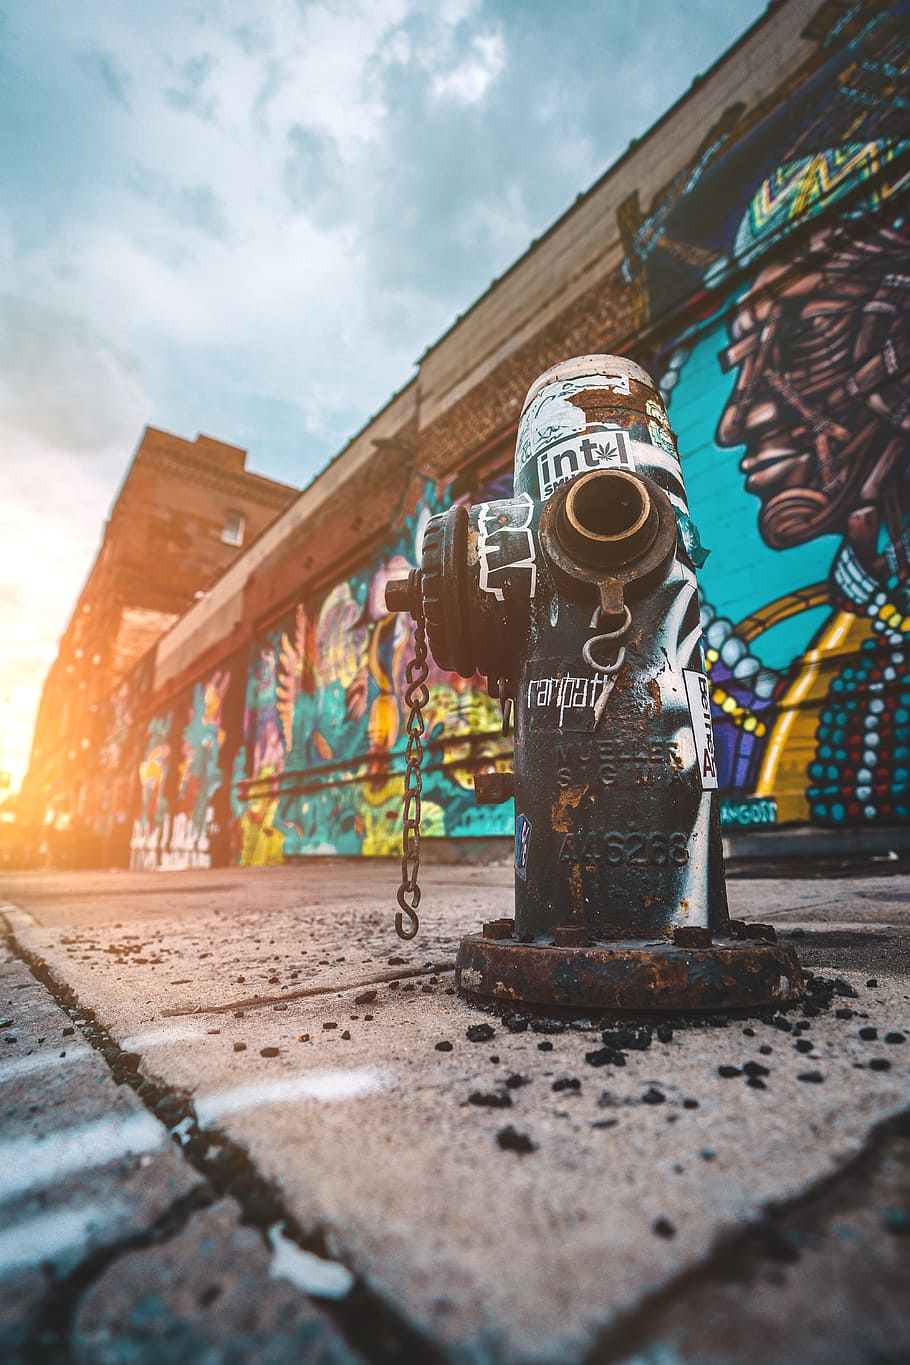 black fire hydrant, art, sunlight, graffiti, street, urban, city